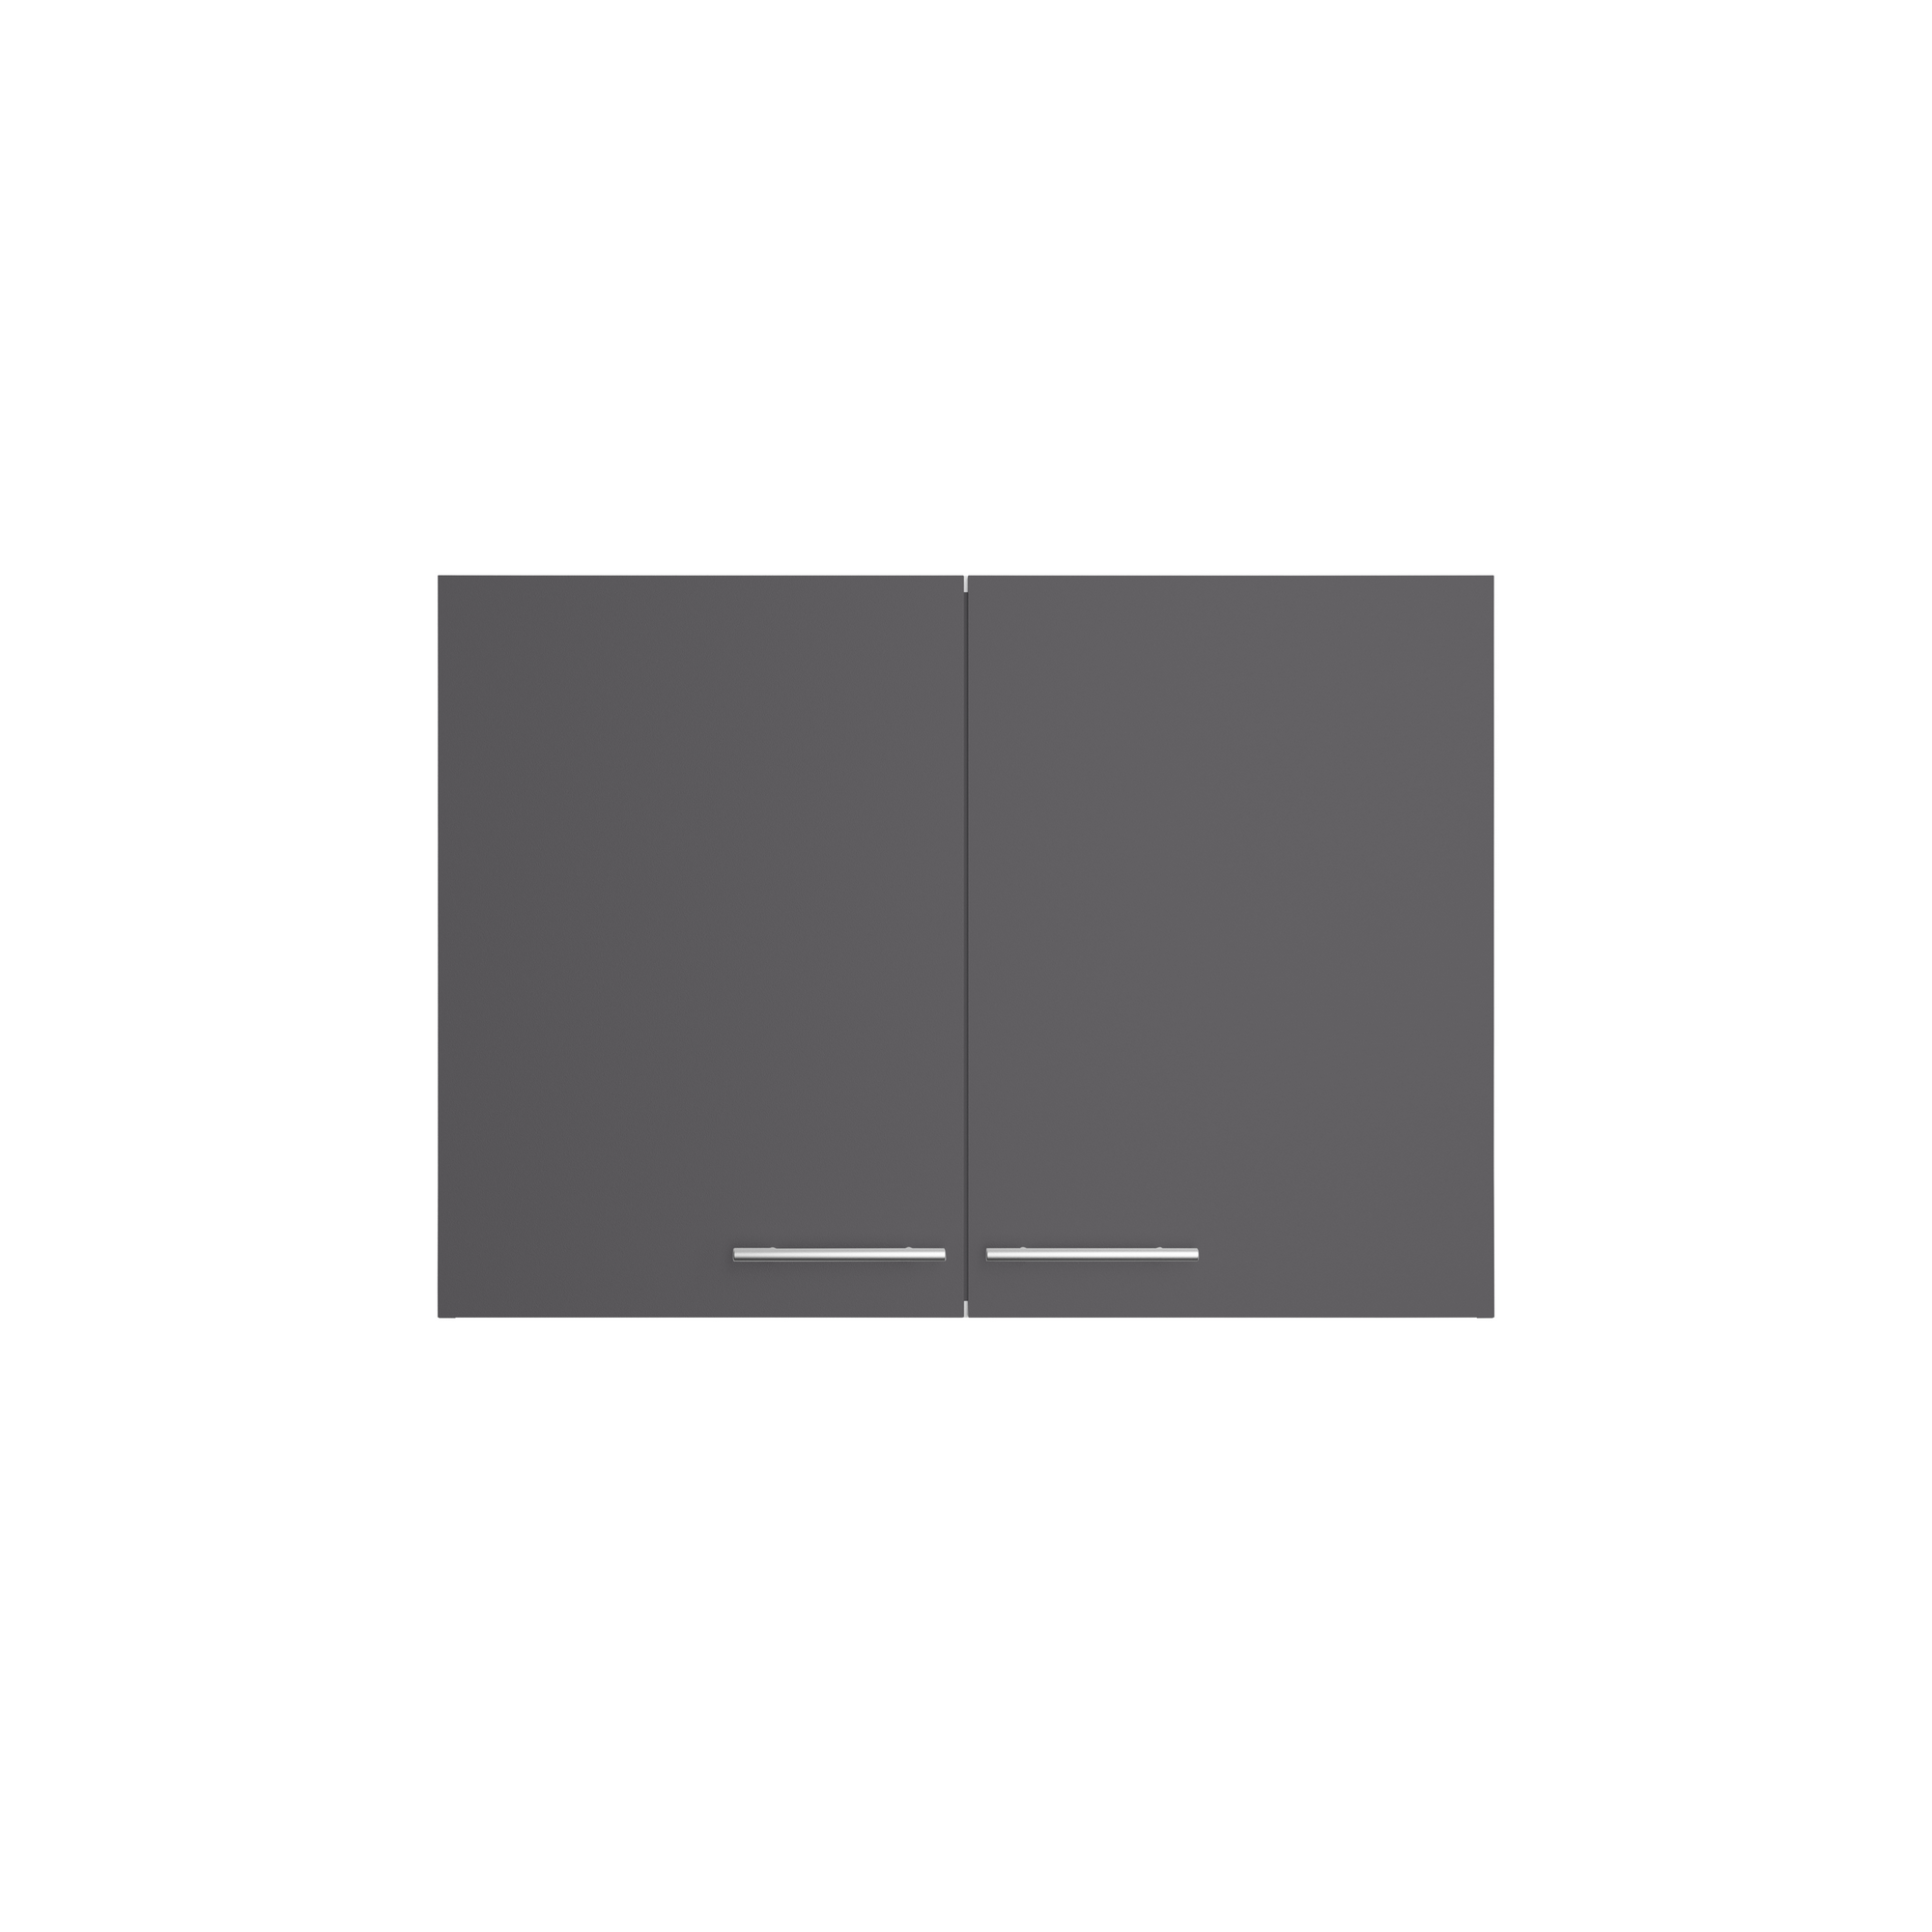 Oberschrank 'Optikomfort Ingvar420' anthrazit matt 100 x 70,4 x 34,9 cm + product picture